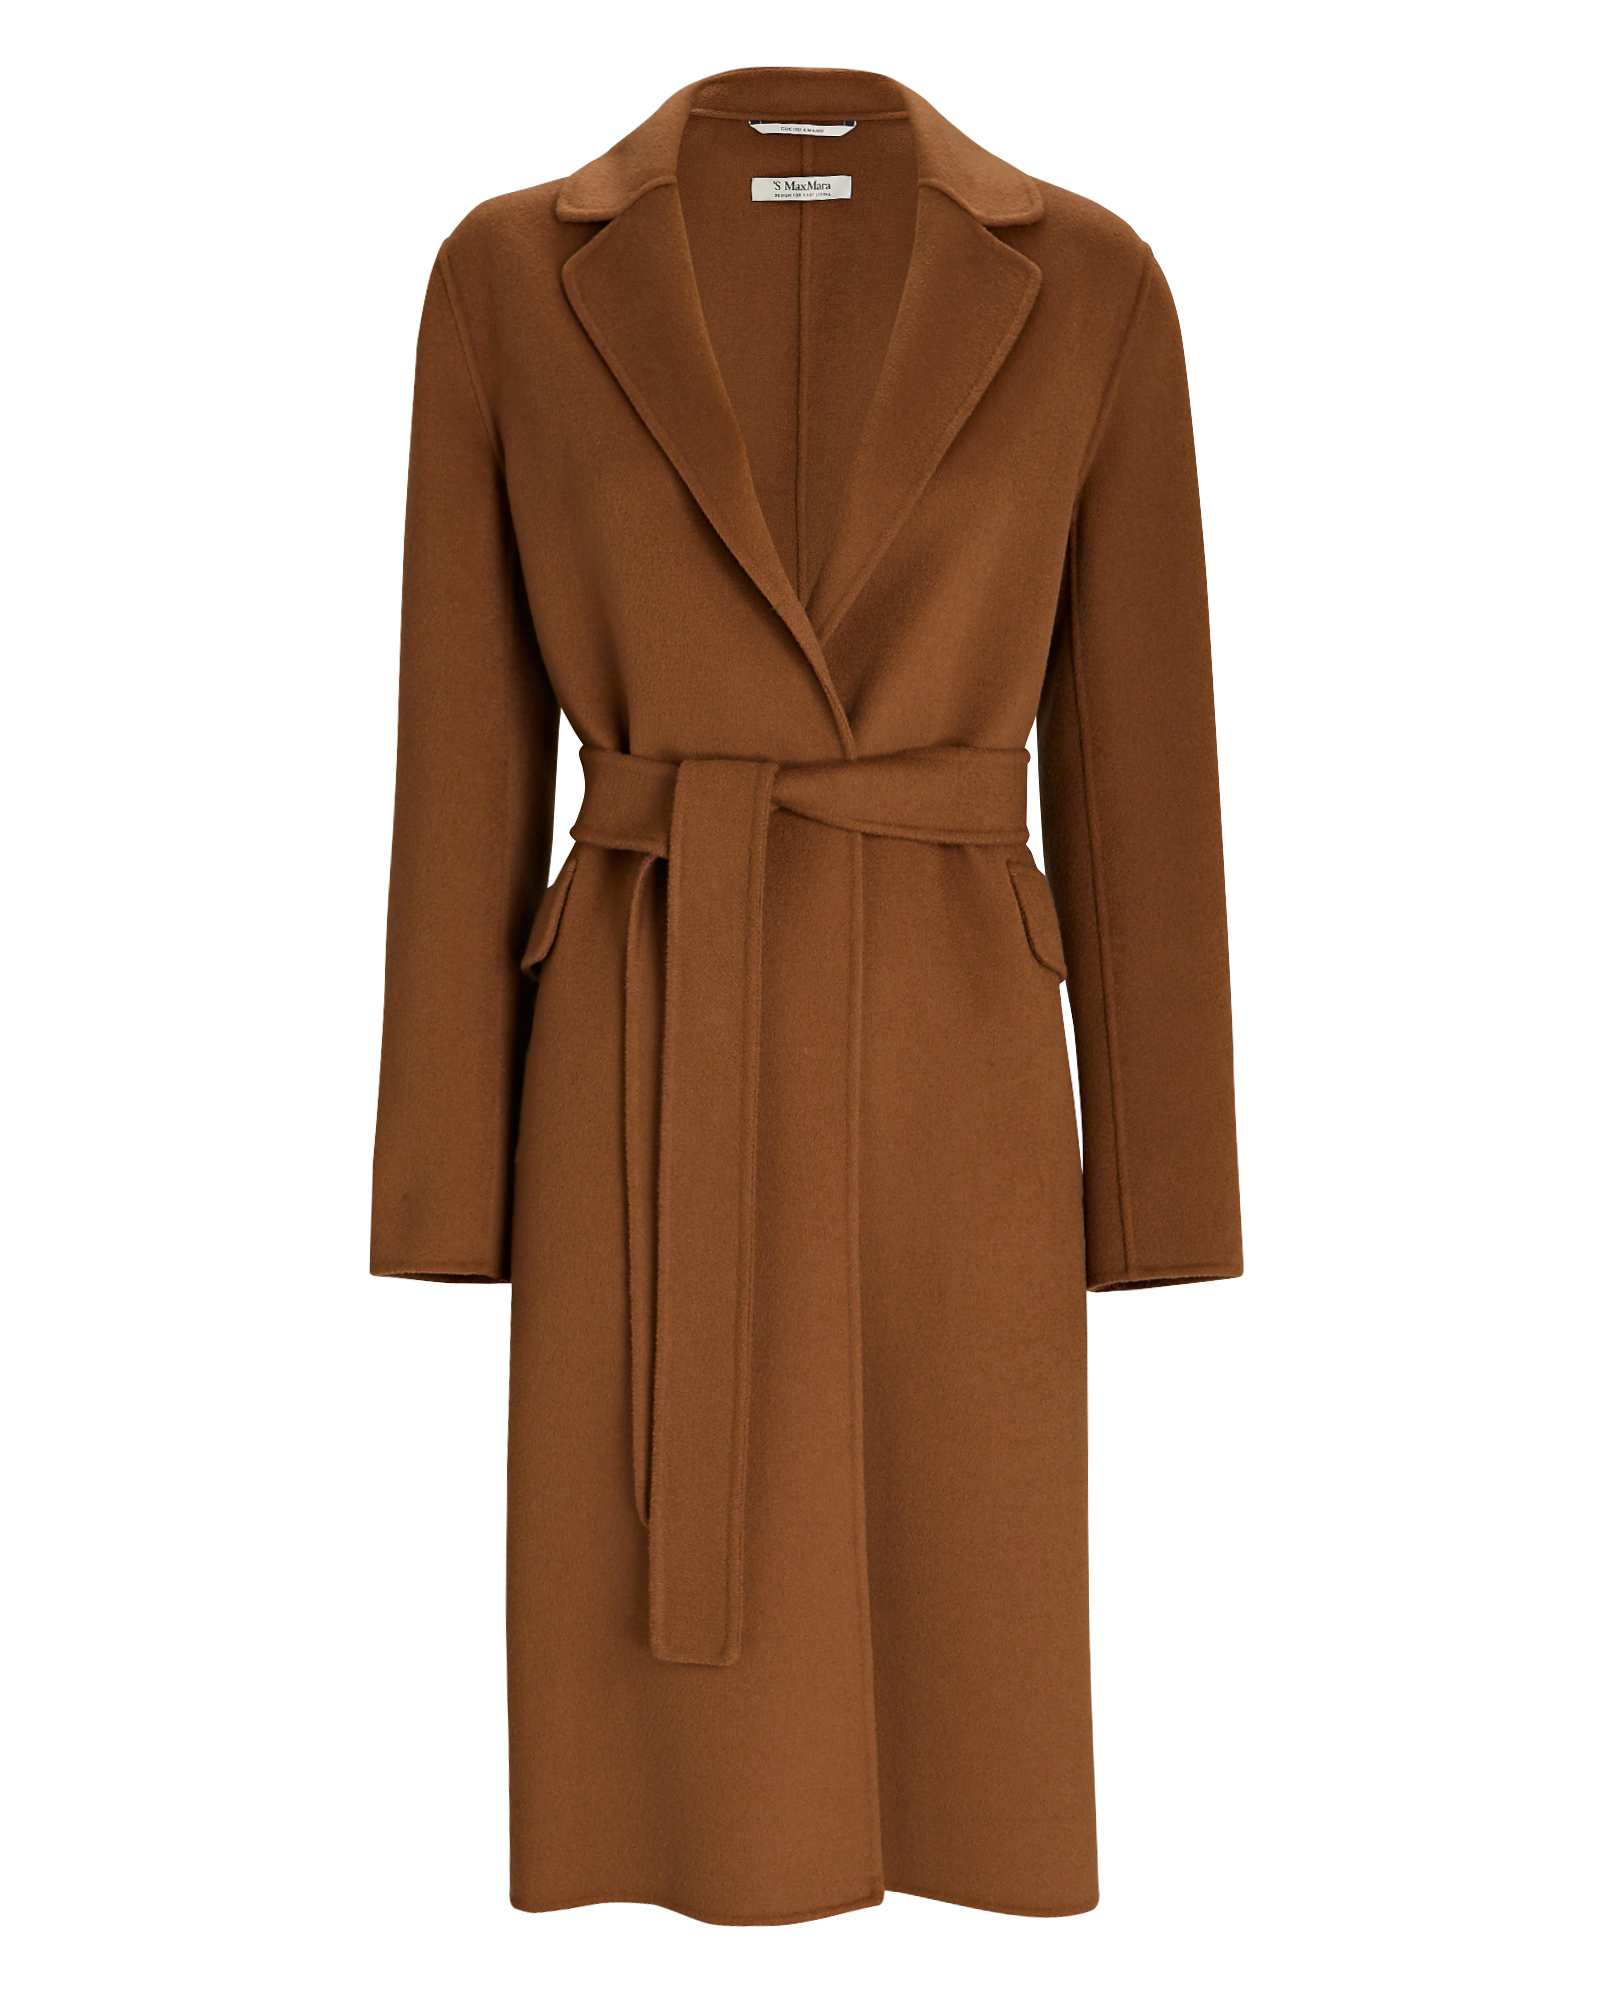 S Max Mara Polly Belted Virgin Wool Coat | INTERMIX®